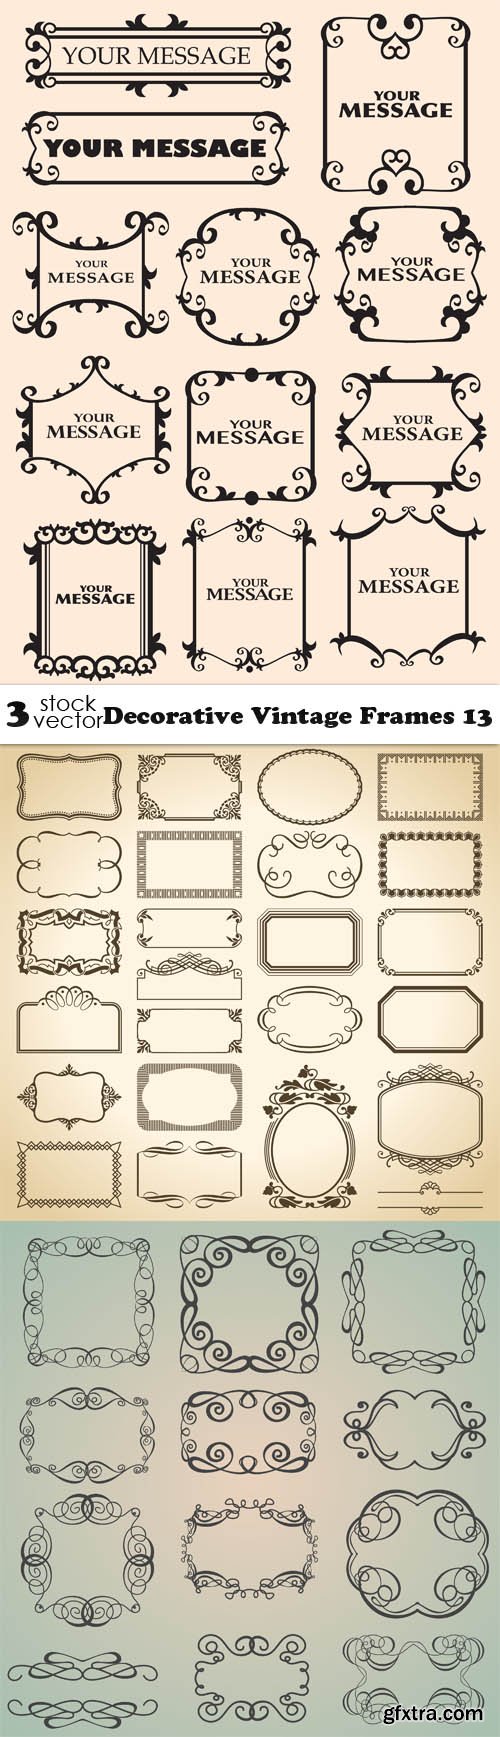 Vectors - Decorative Vintage Frames 13